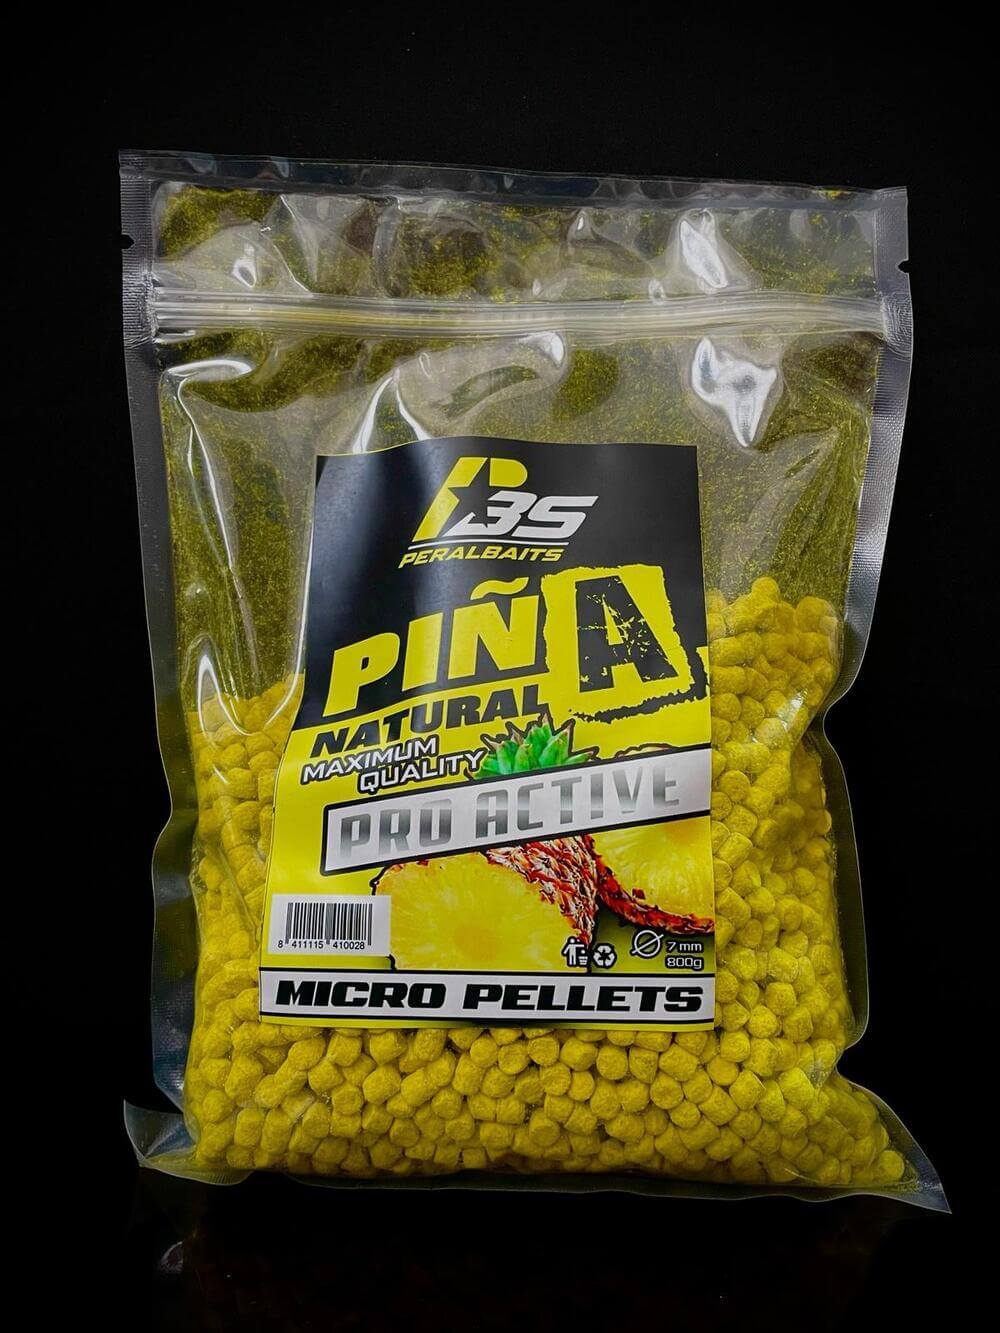 Micro Pellets Peralbaits Piña Natural 7 mm